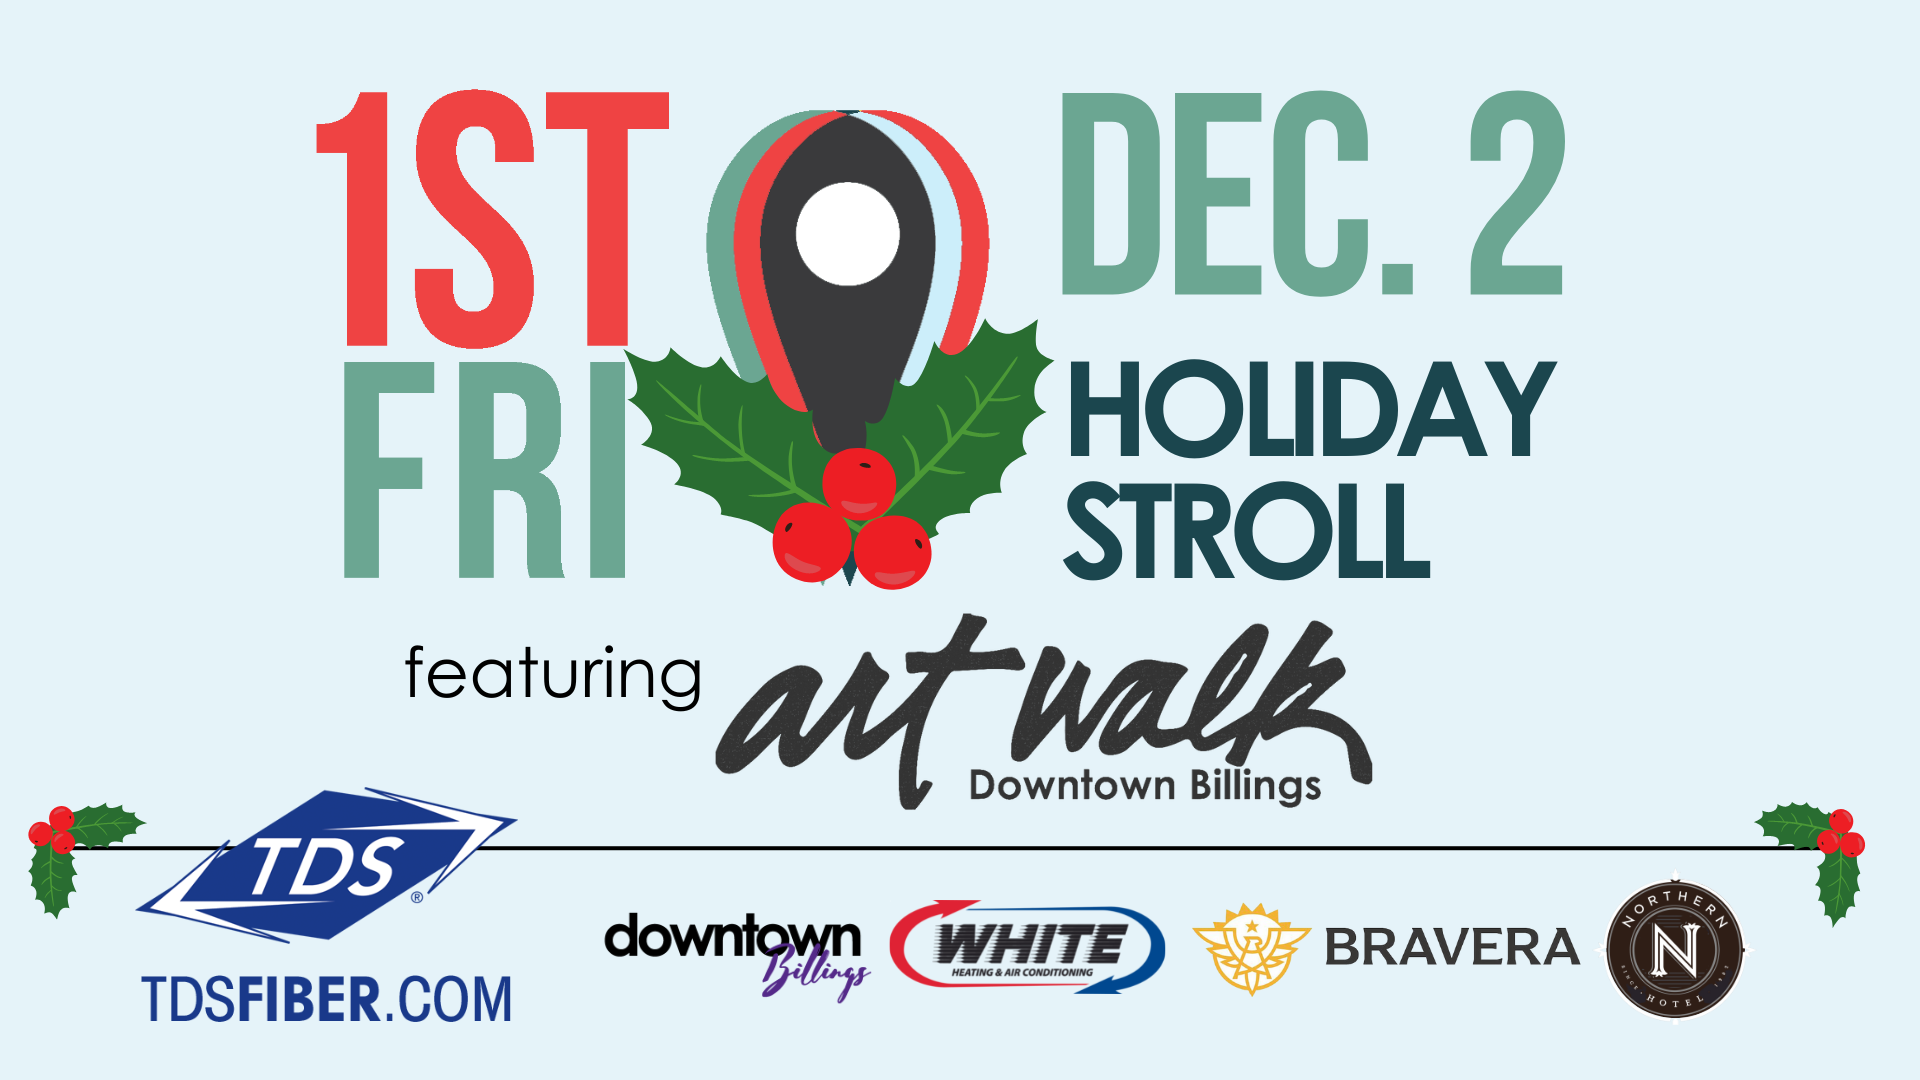 December 2 Holiday Stroll in downtown Billings featuring ArtWalk